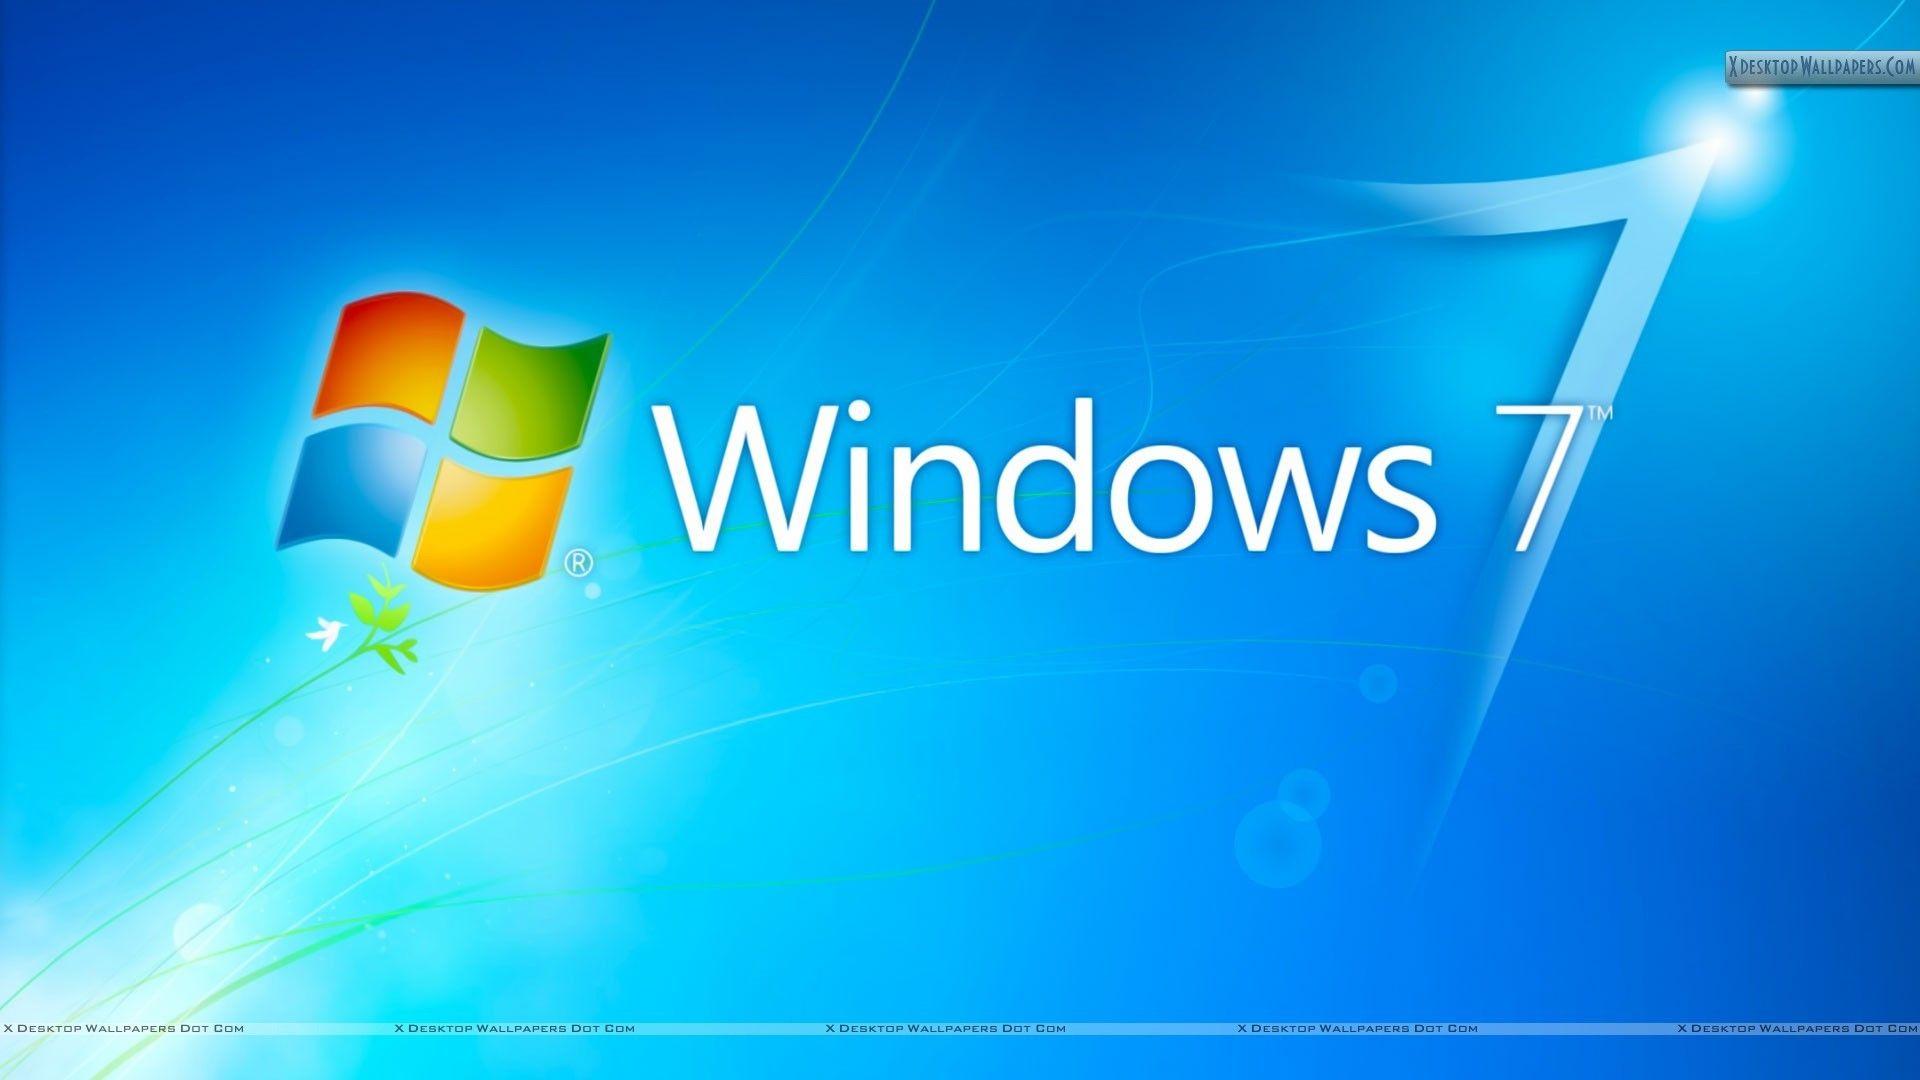 windows 7 ultimate vmware image download